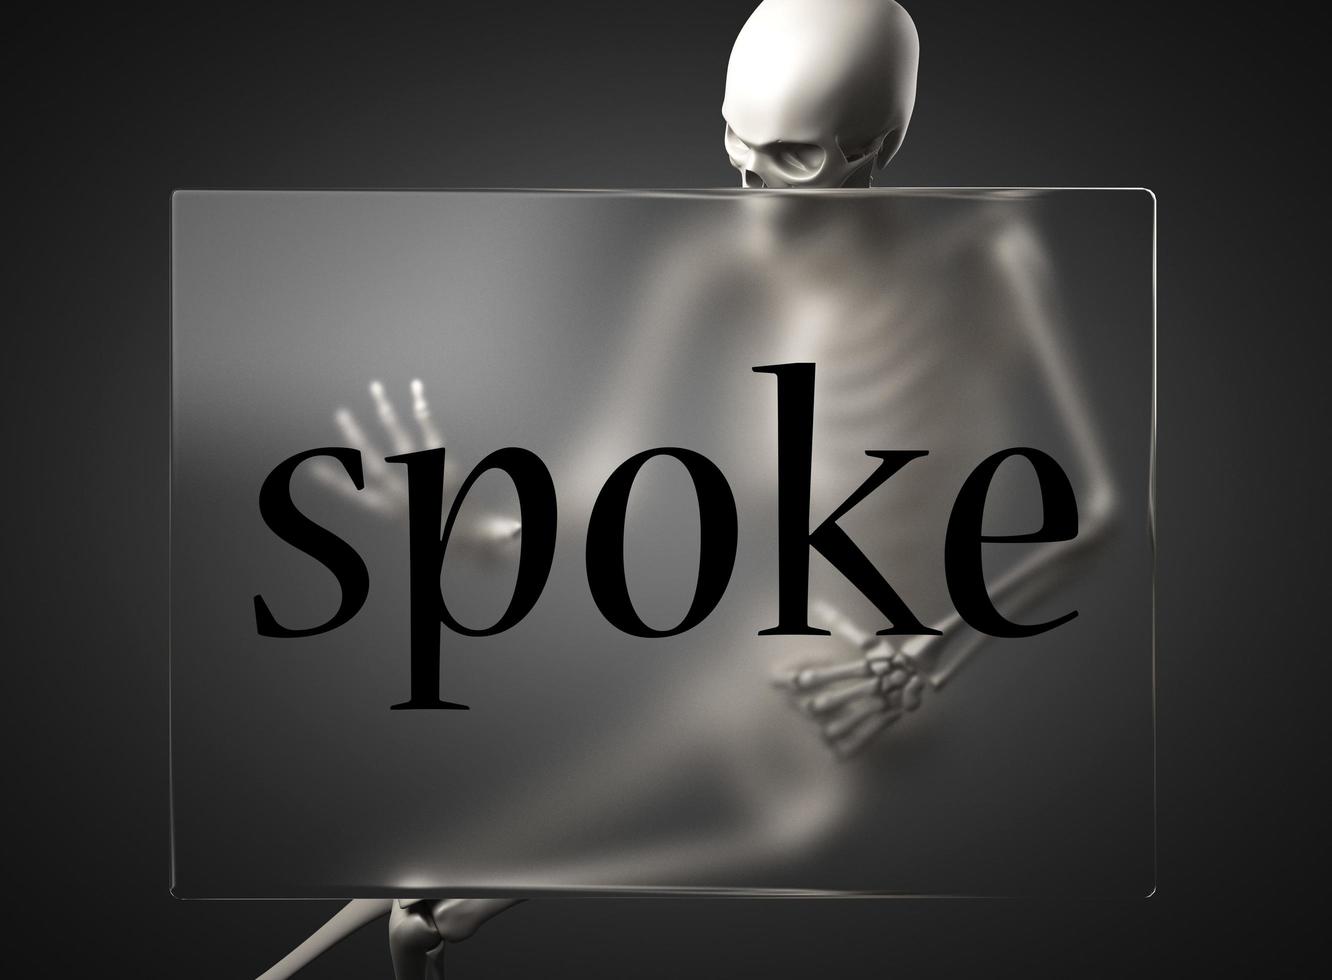 spoke word on glass and skeleton photo